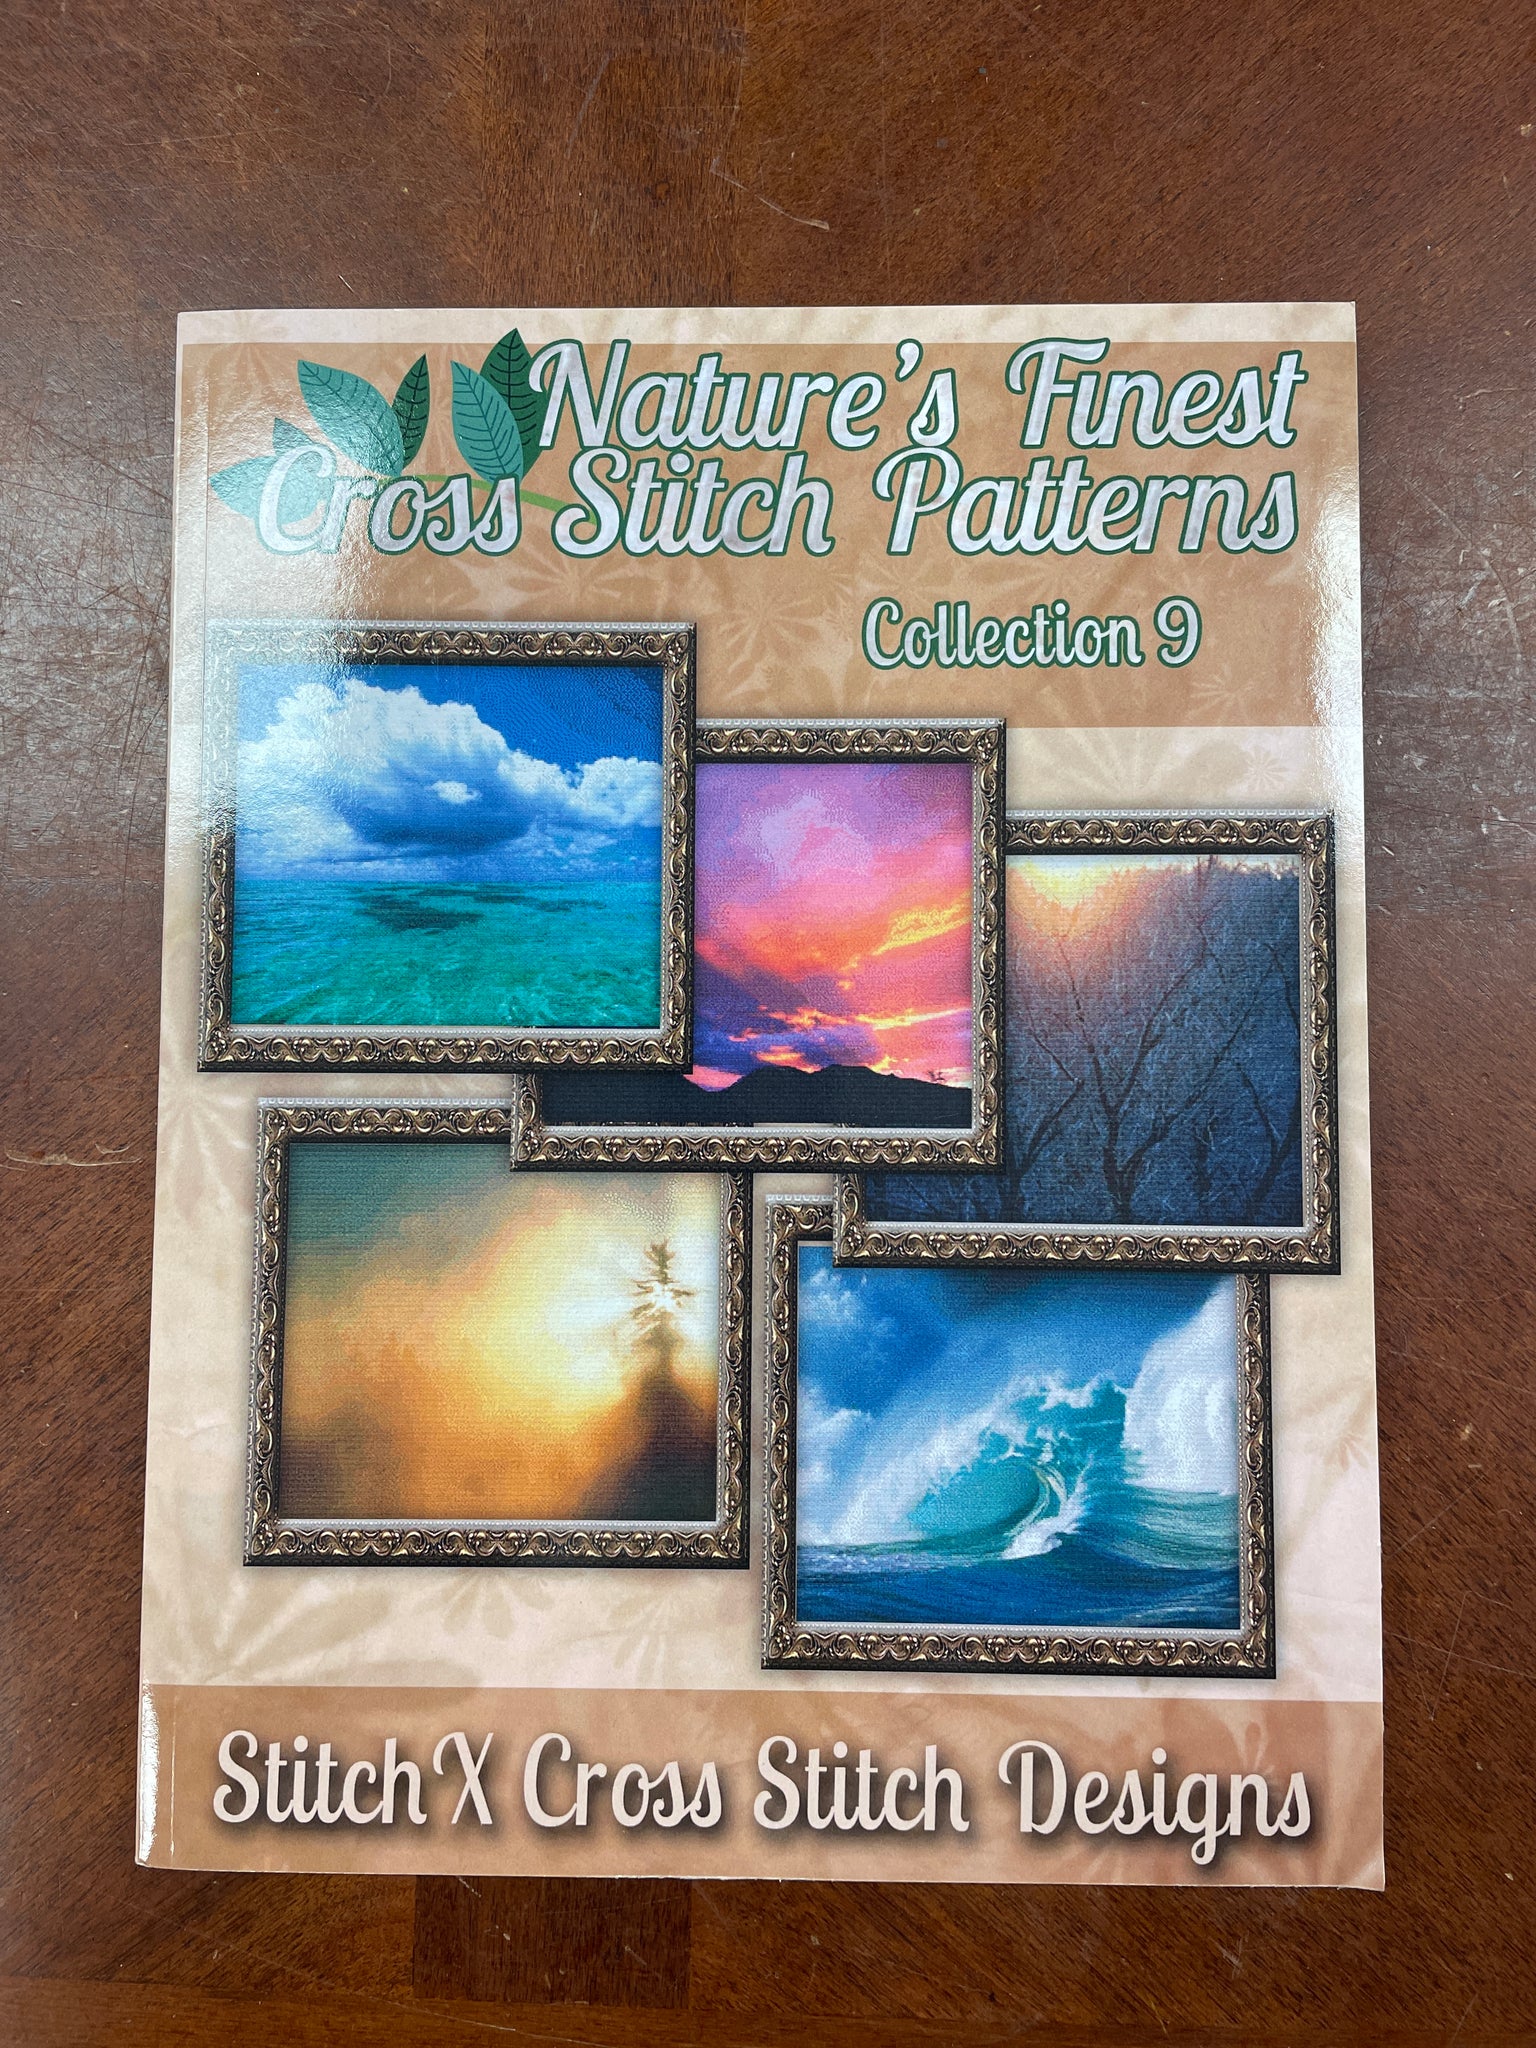 2020 Cross Stitch Book - "Nature's Finest Cross Stitch Patterns Collection 9"